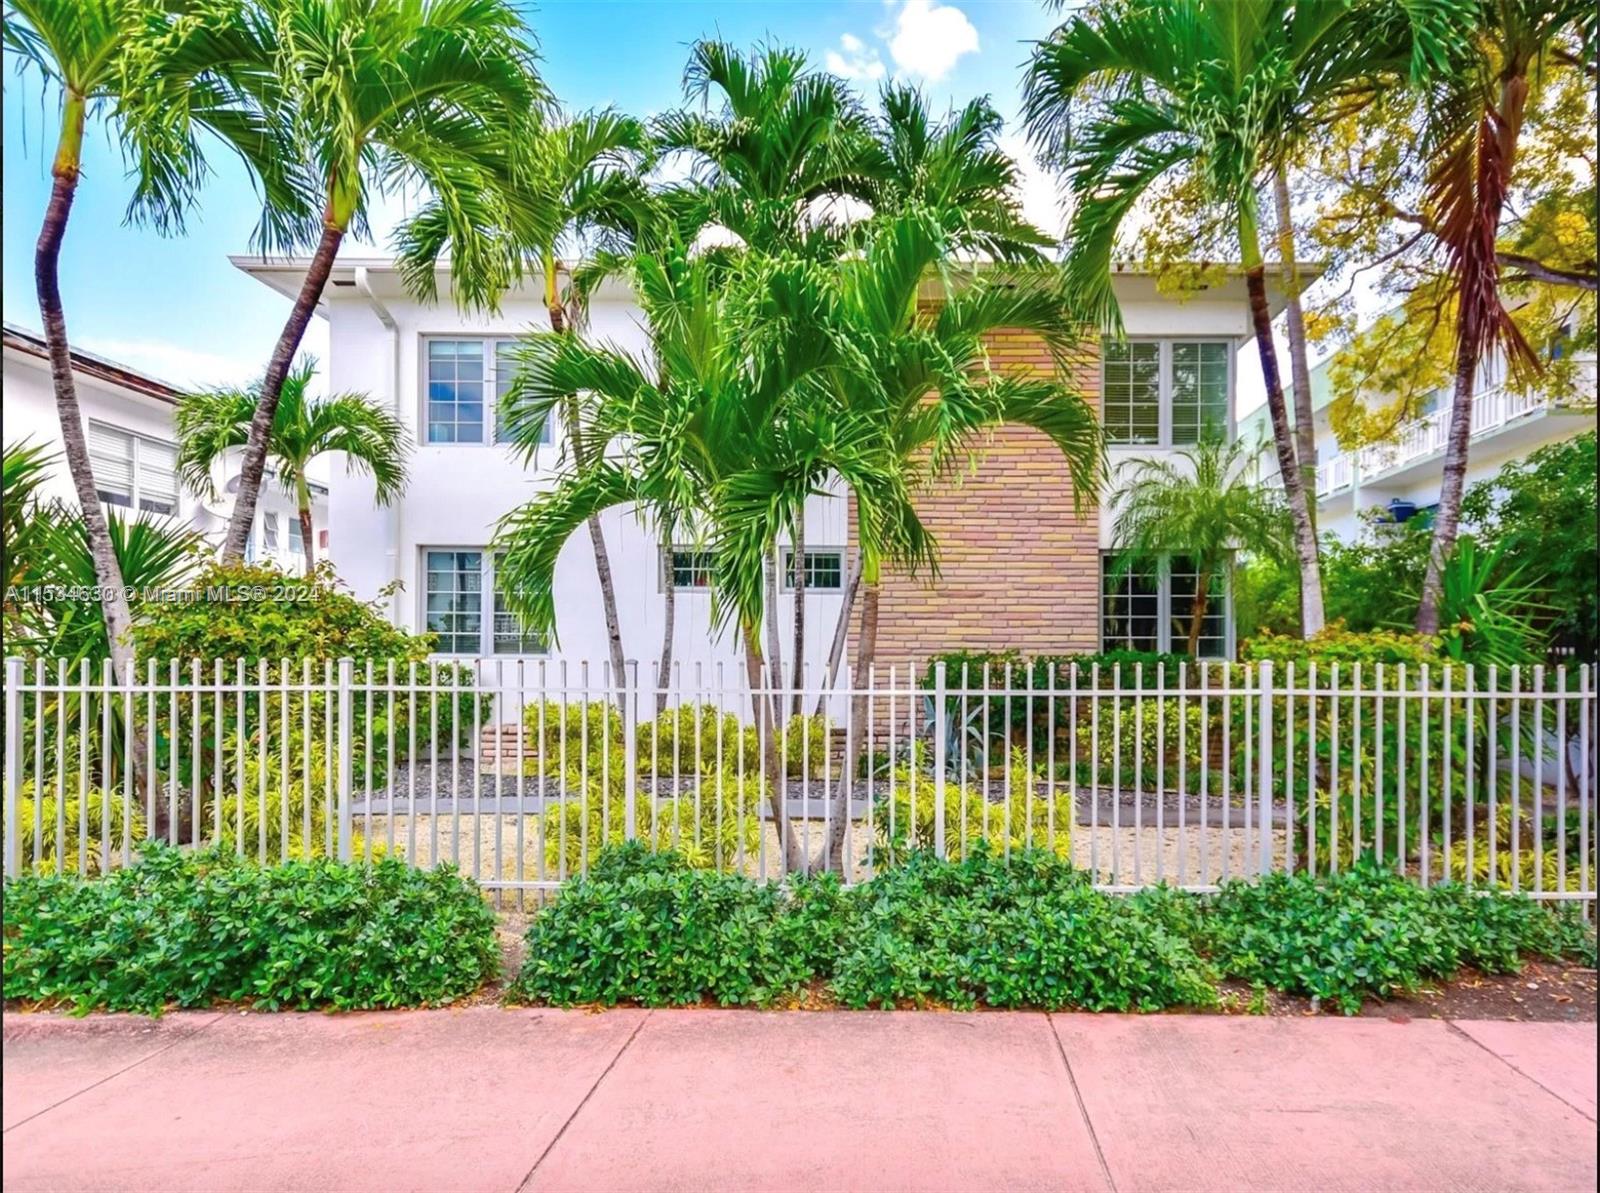 Property for Sale at 1045 Lenox Ave 7, Miami Beach, Miami-Dade County, Florida - Bedrooms: 2 
Bathrooms: 2  - $499,000